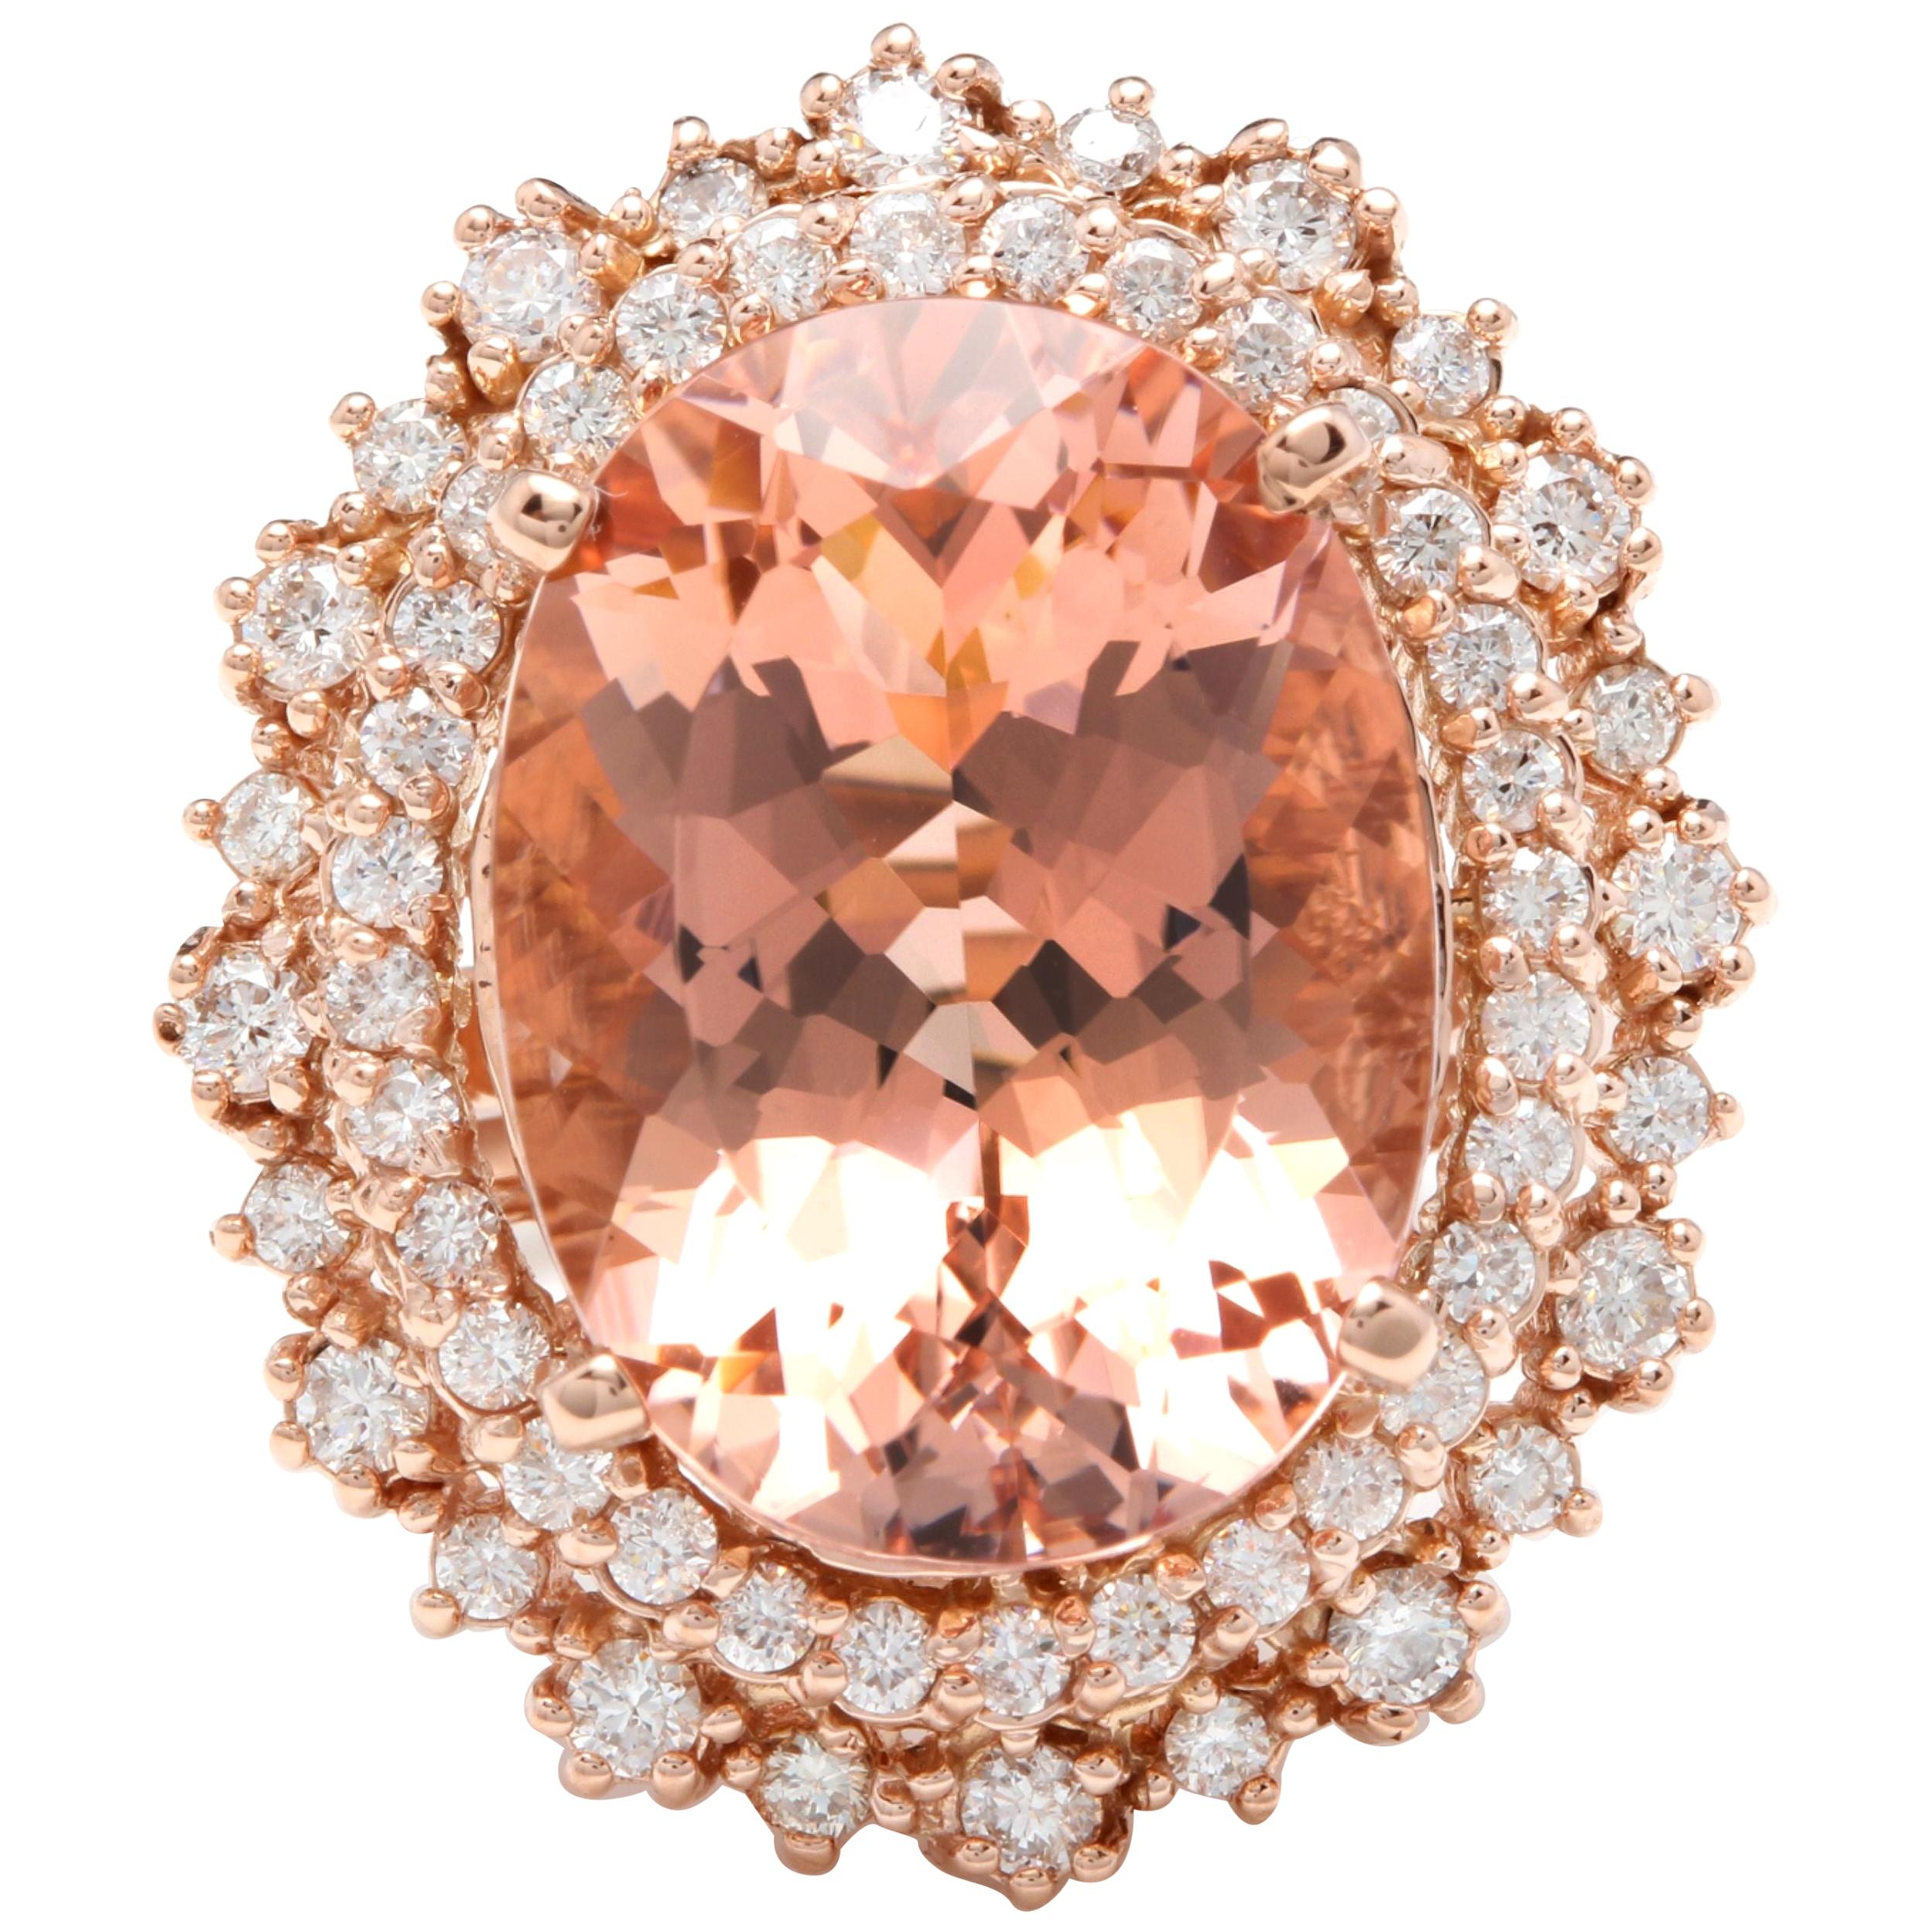 Bague en or massif 14 carats avec diamants et morganite naturelle exquise de 13,65 carats